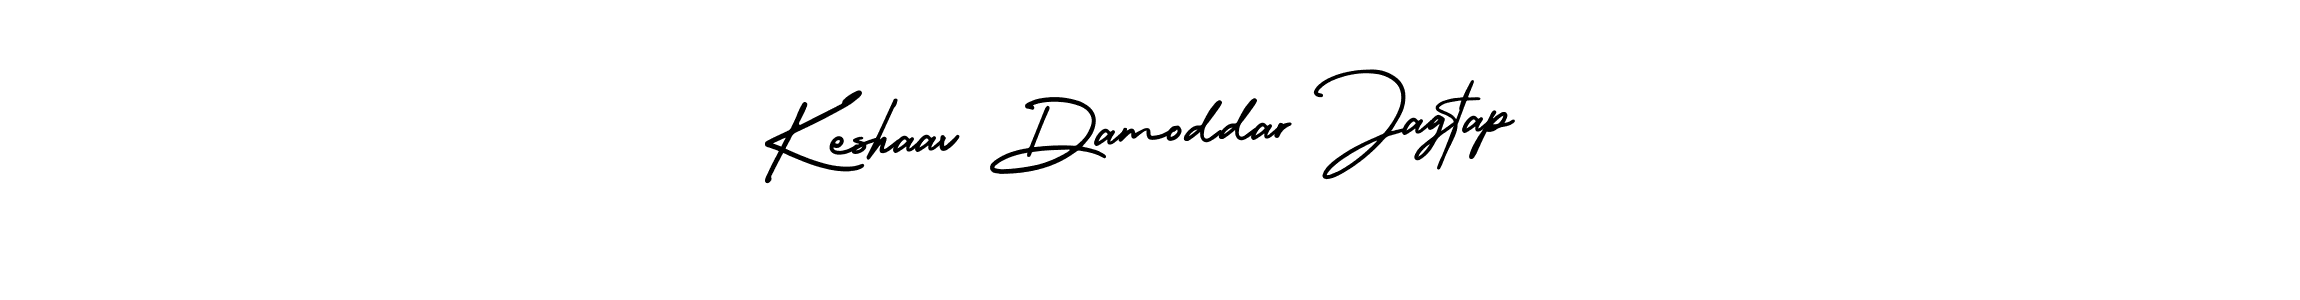 Best and Professional Signature Style for Keshaav Damoddar Jagtap. AmerikaSignatureDemo-Regular Best Signature Style Collection. Keshaav Damoddar Jagtap signature style 3 images and pictures png